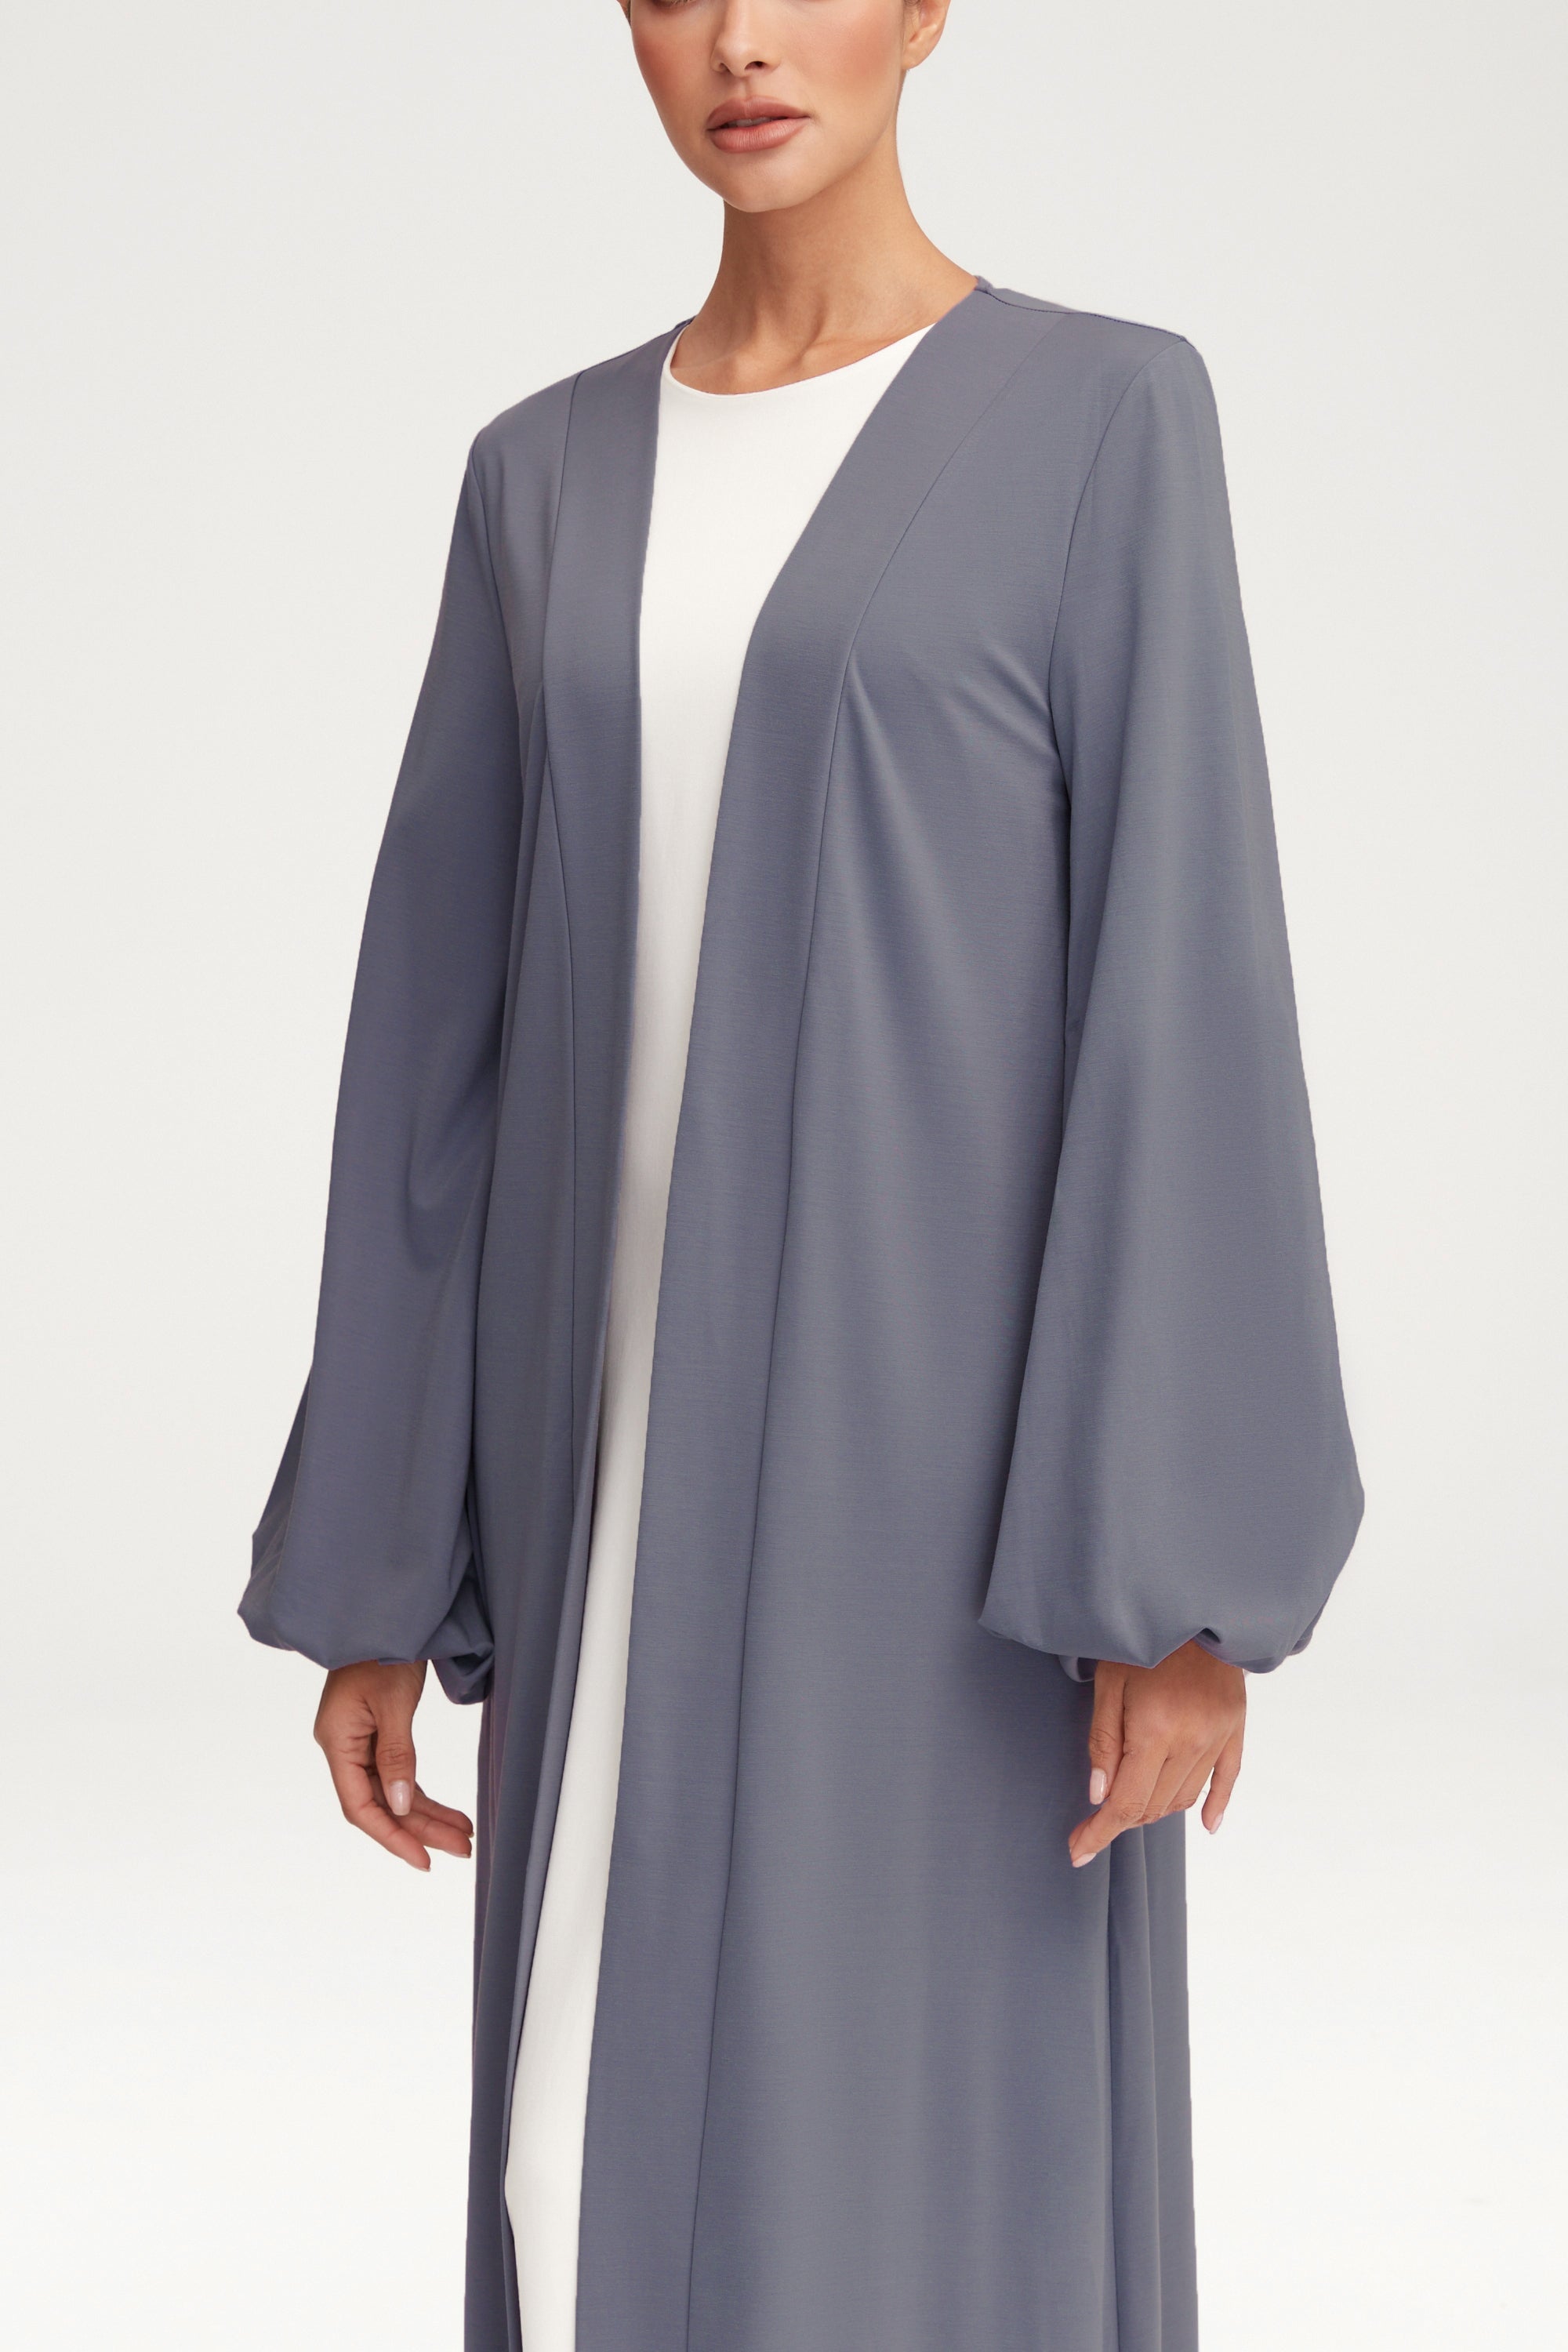 Essential Jersey Open Abaya - Denim Clothing Veiled 